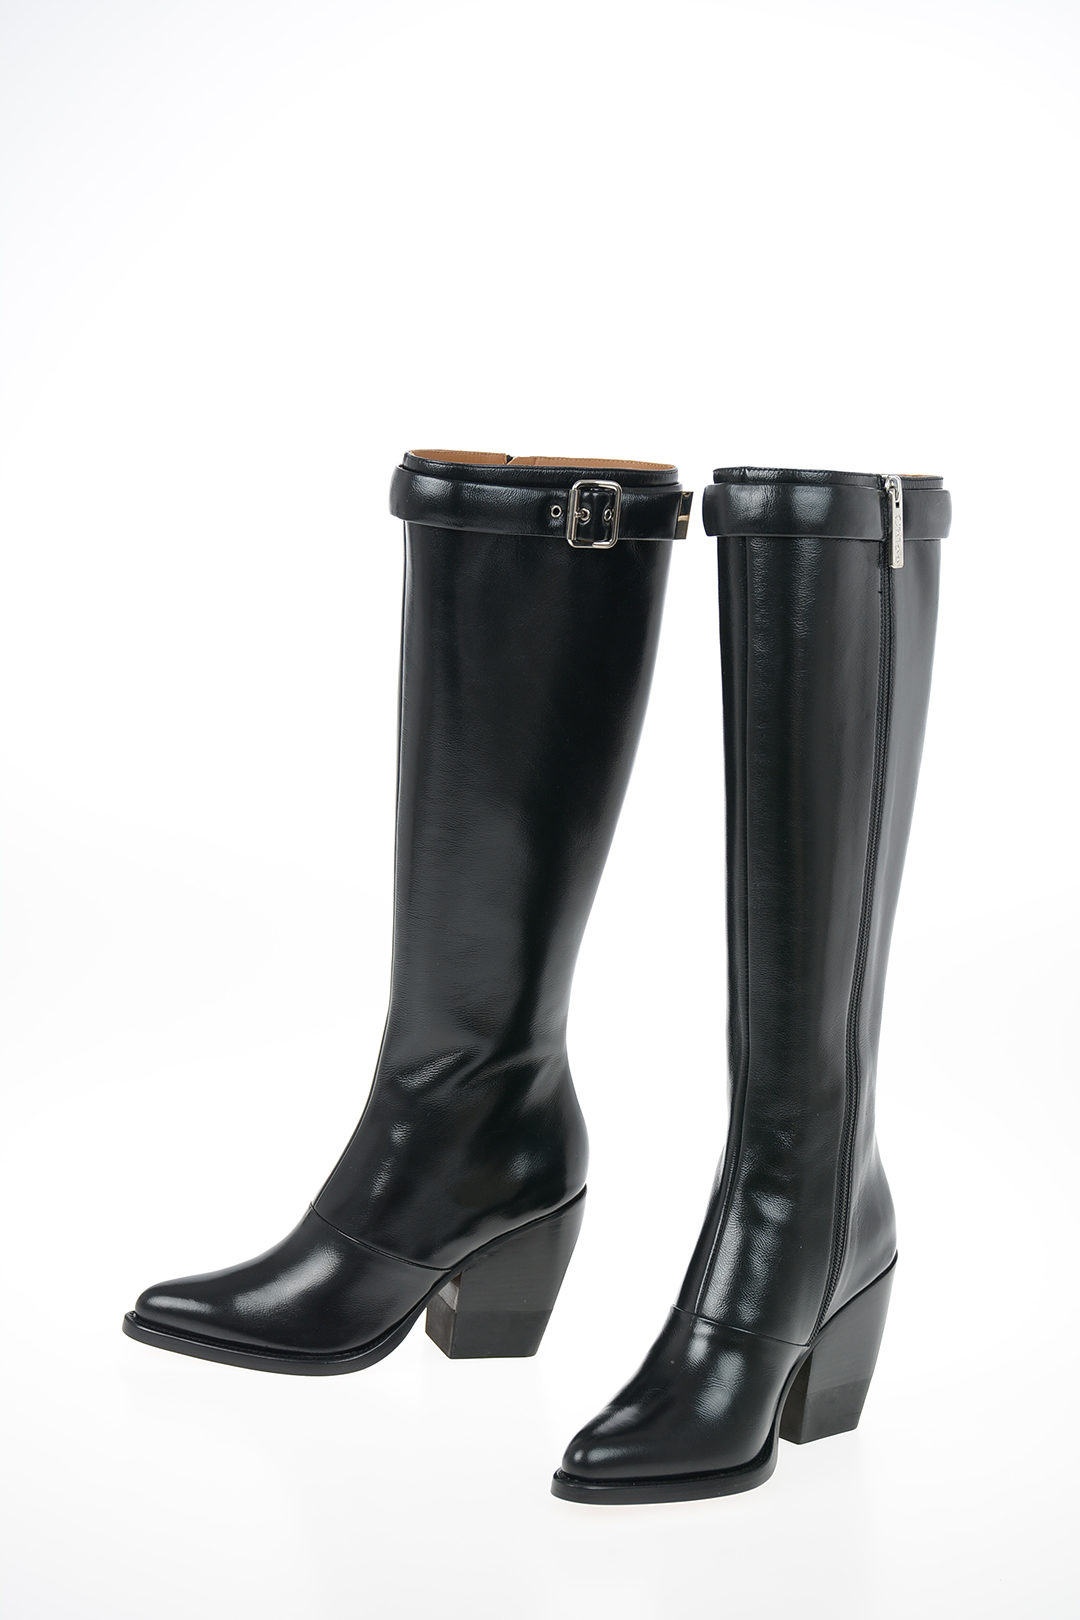 Chloe Leather Knee High Boots 9cm women 